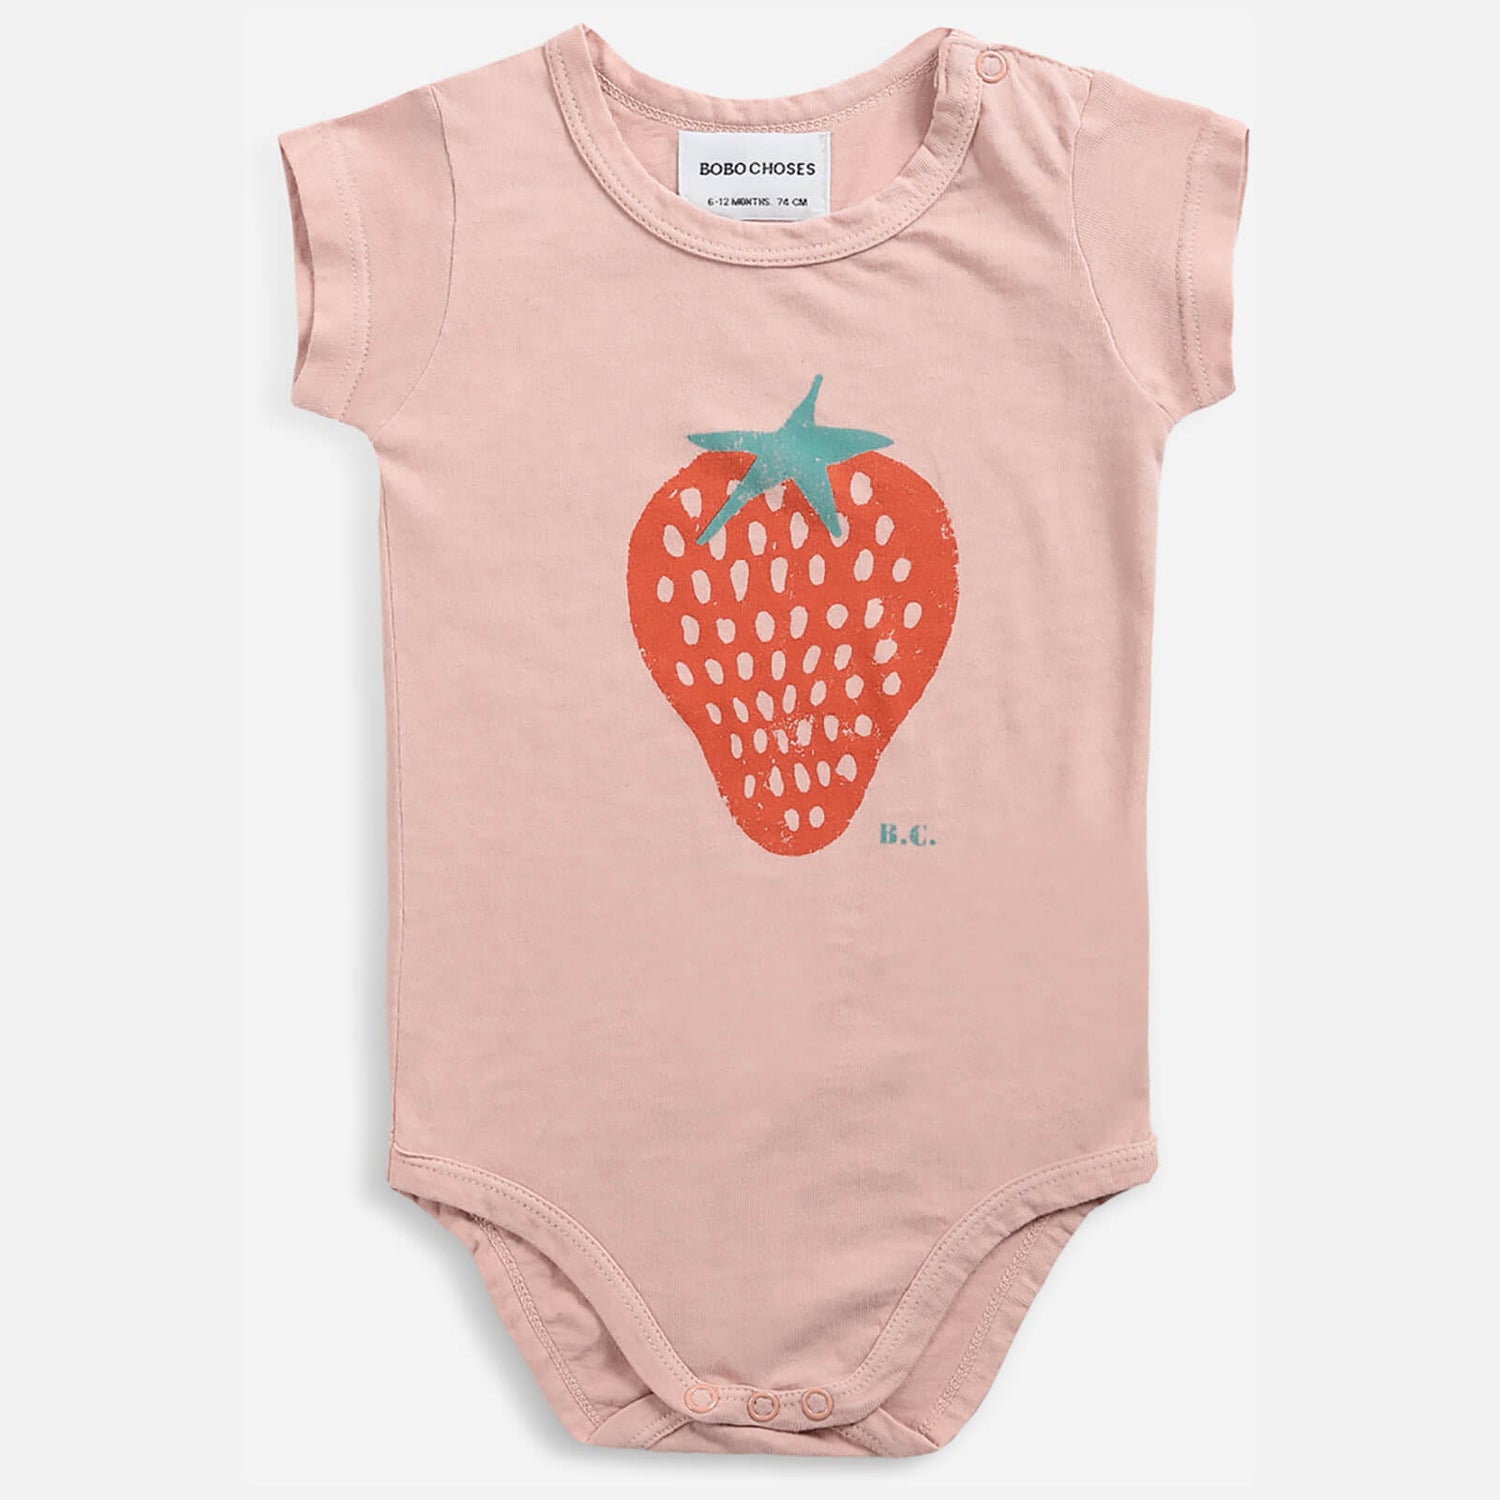 Bobo Choses Baby Strawberry Short Sleeve Body - 3-6 months